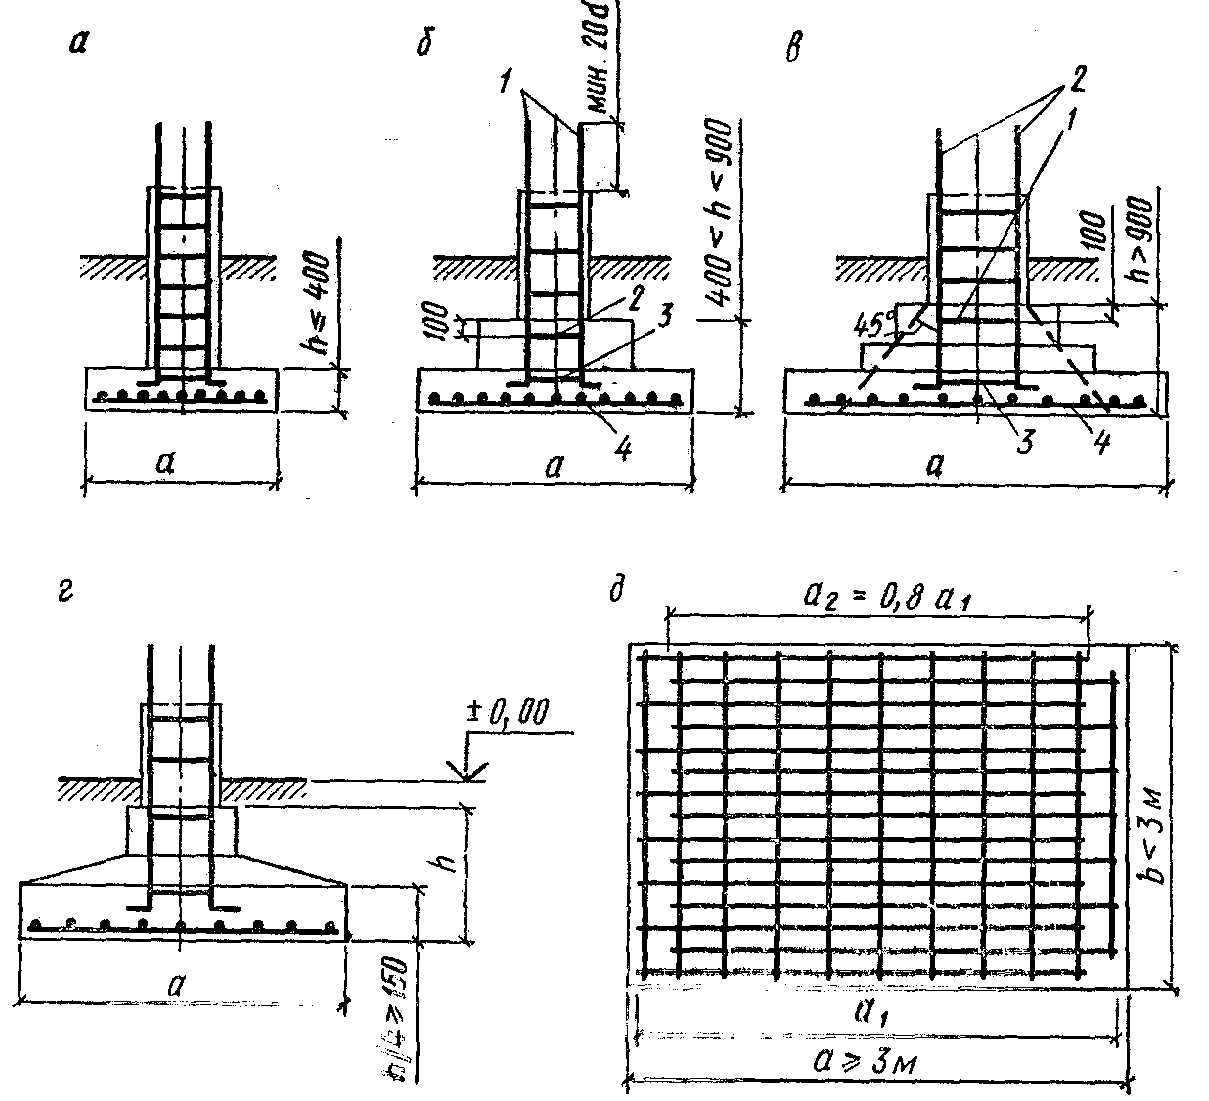 Как сооружают столбчатые фундаменты под колонны?